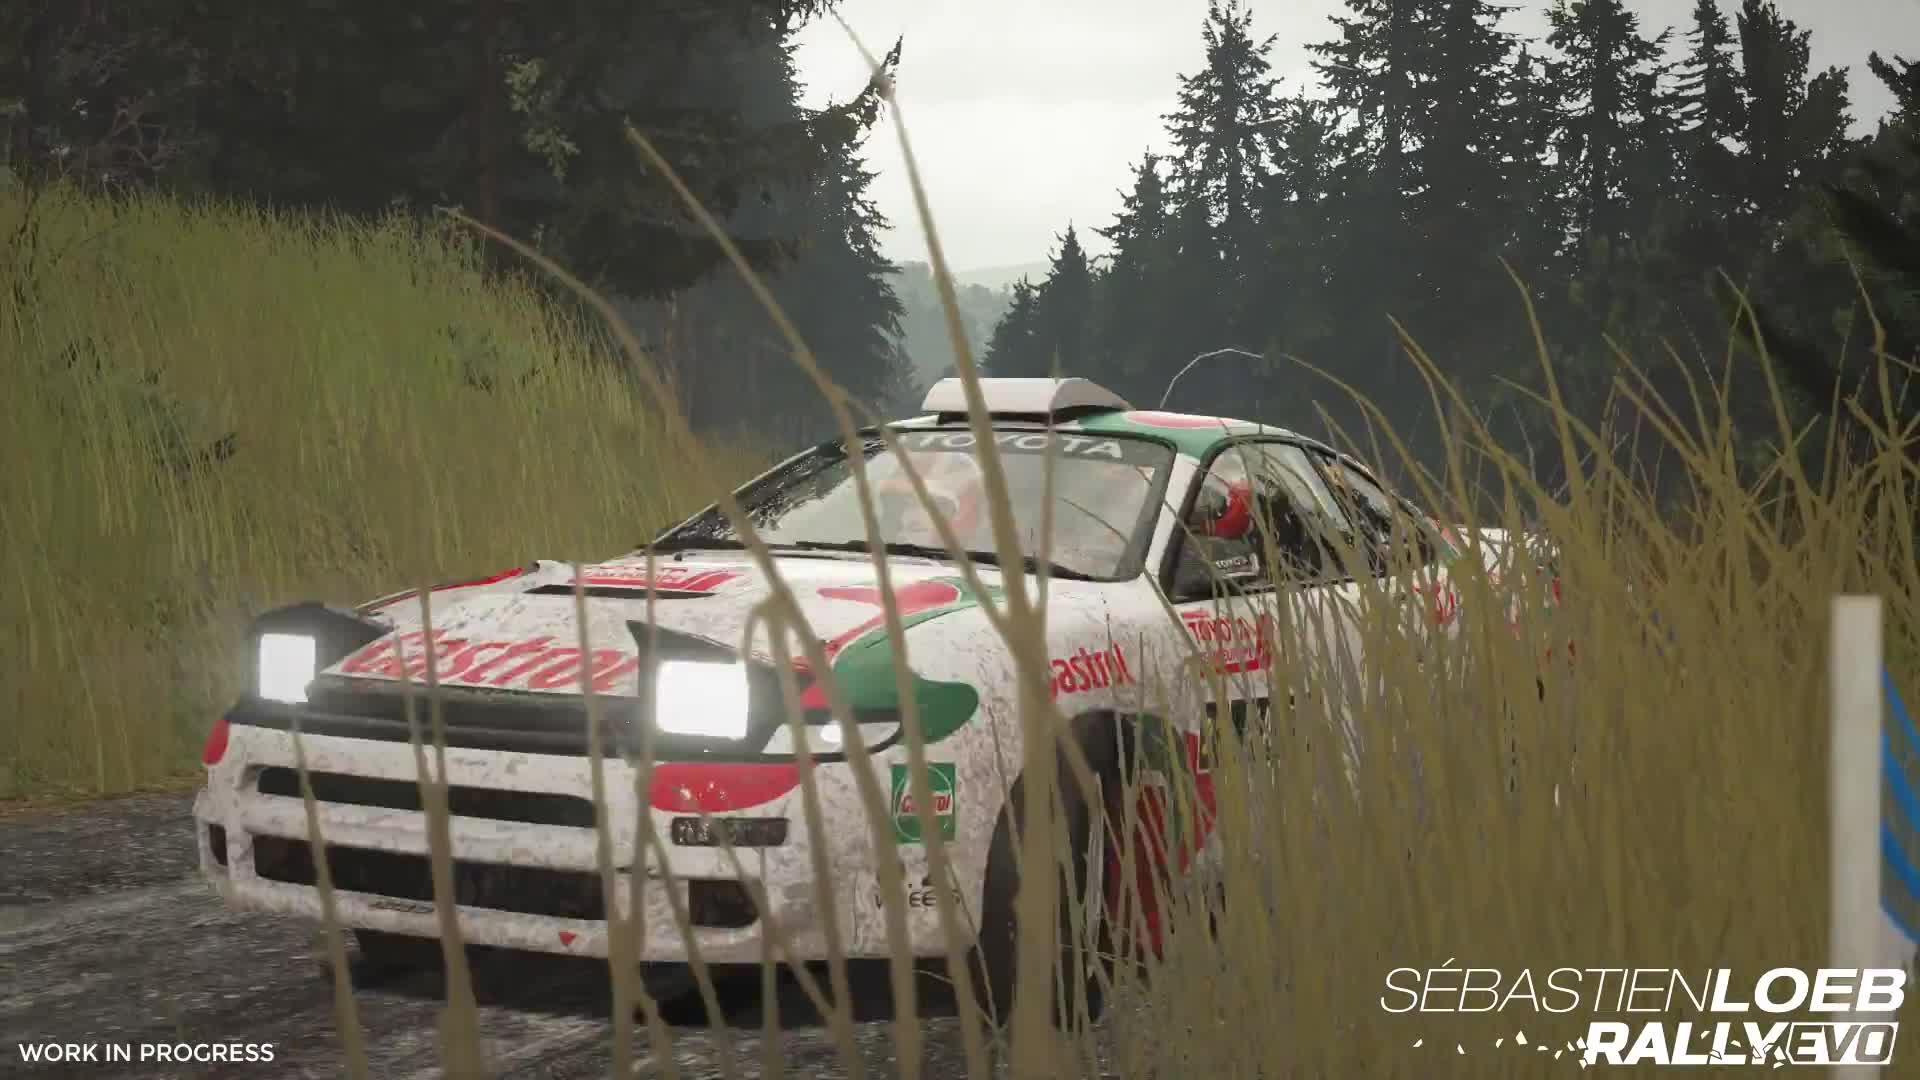 Sbastien Loeb Rally Evo - trailer